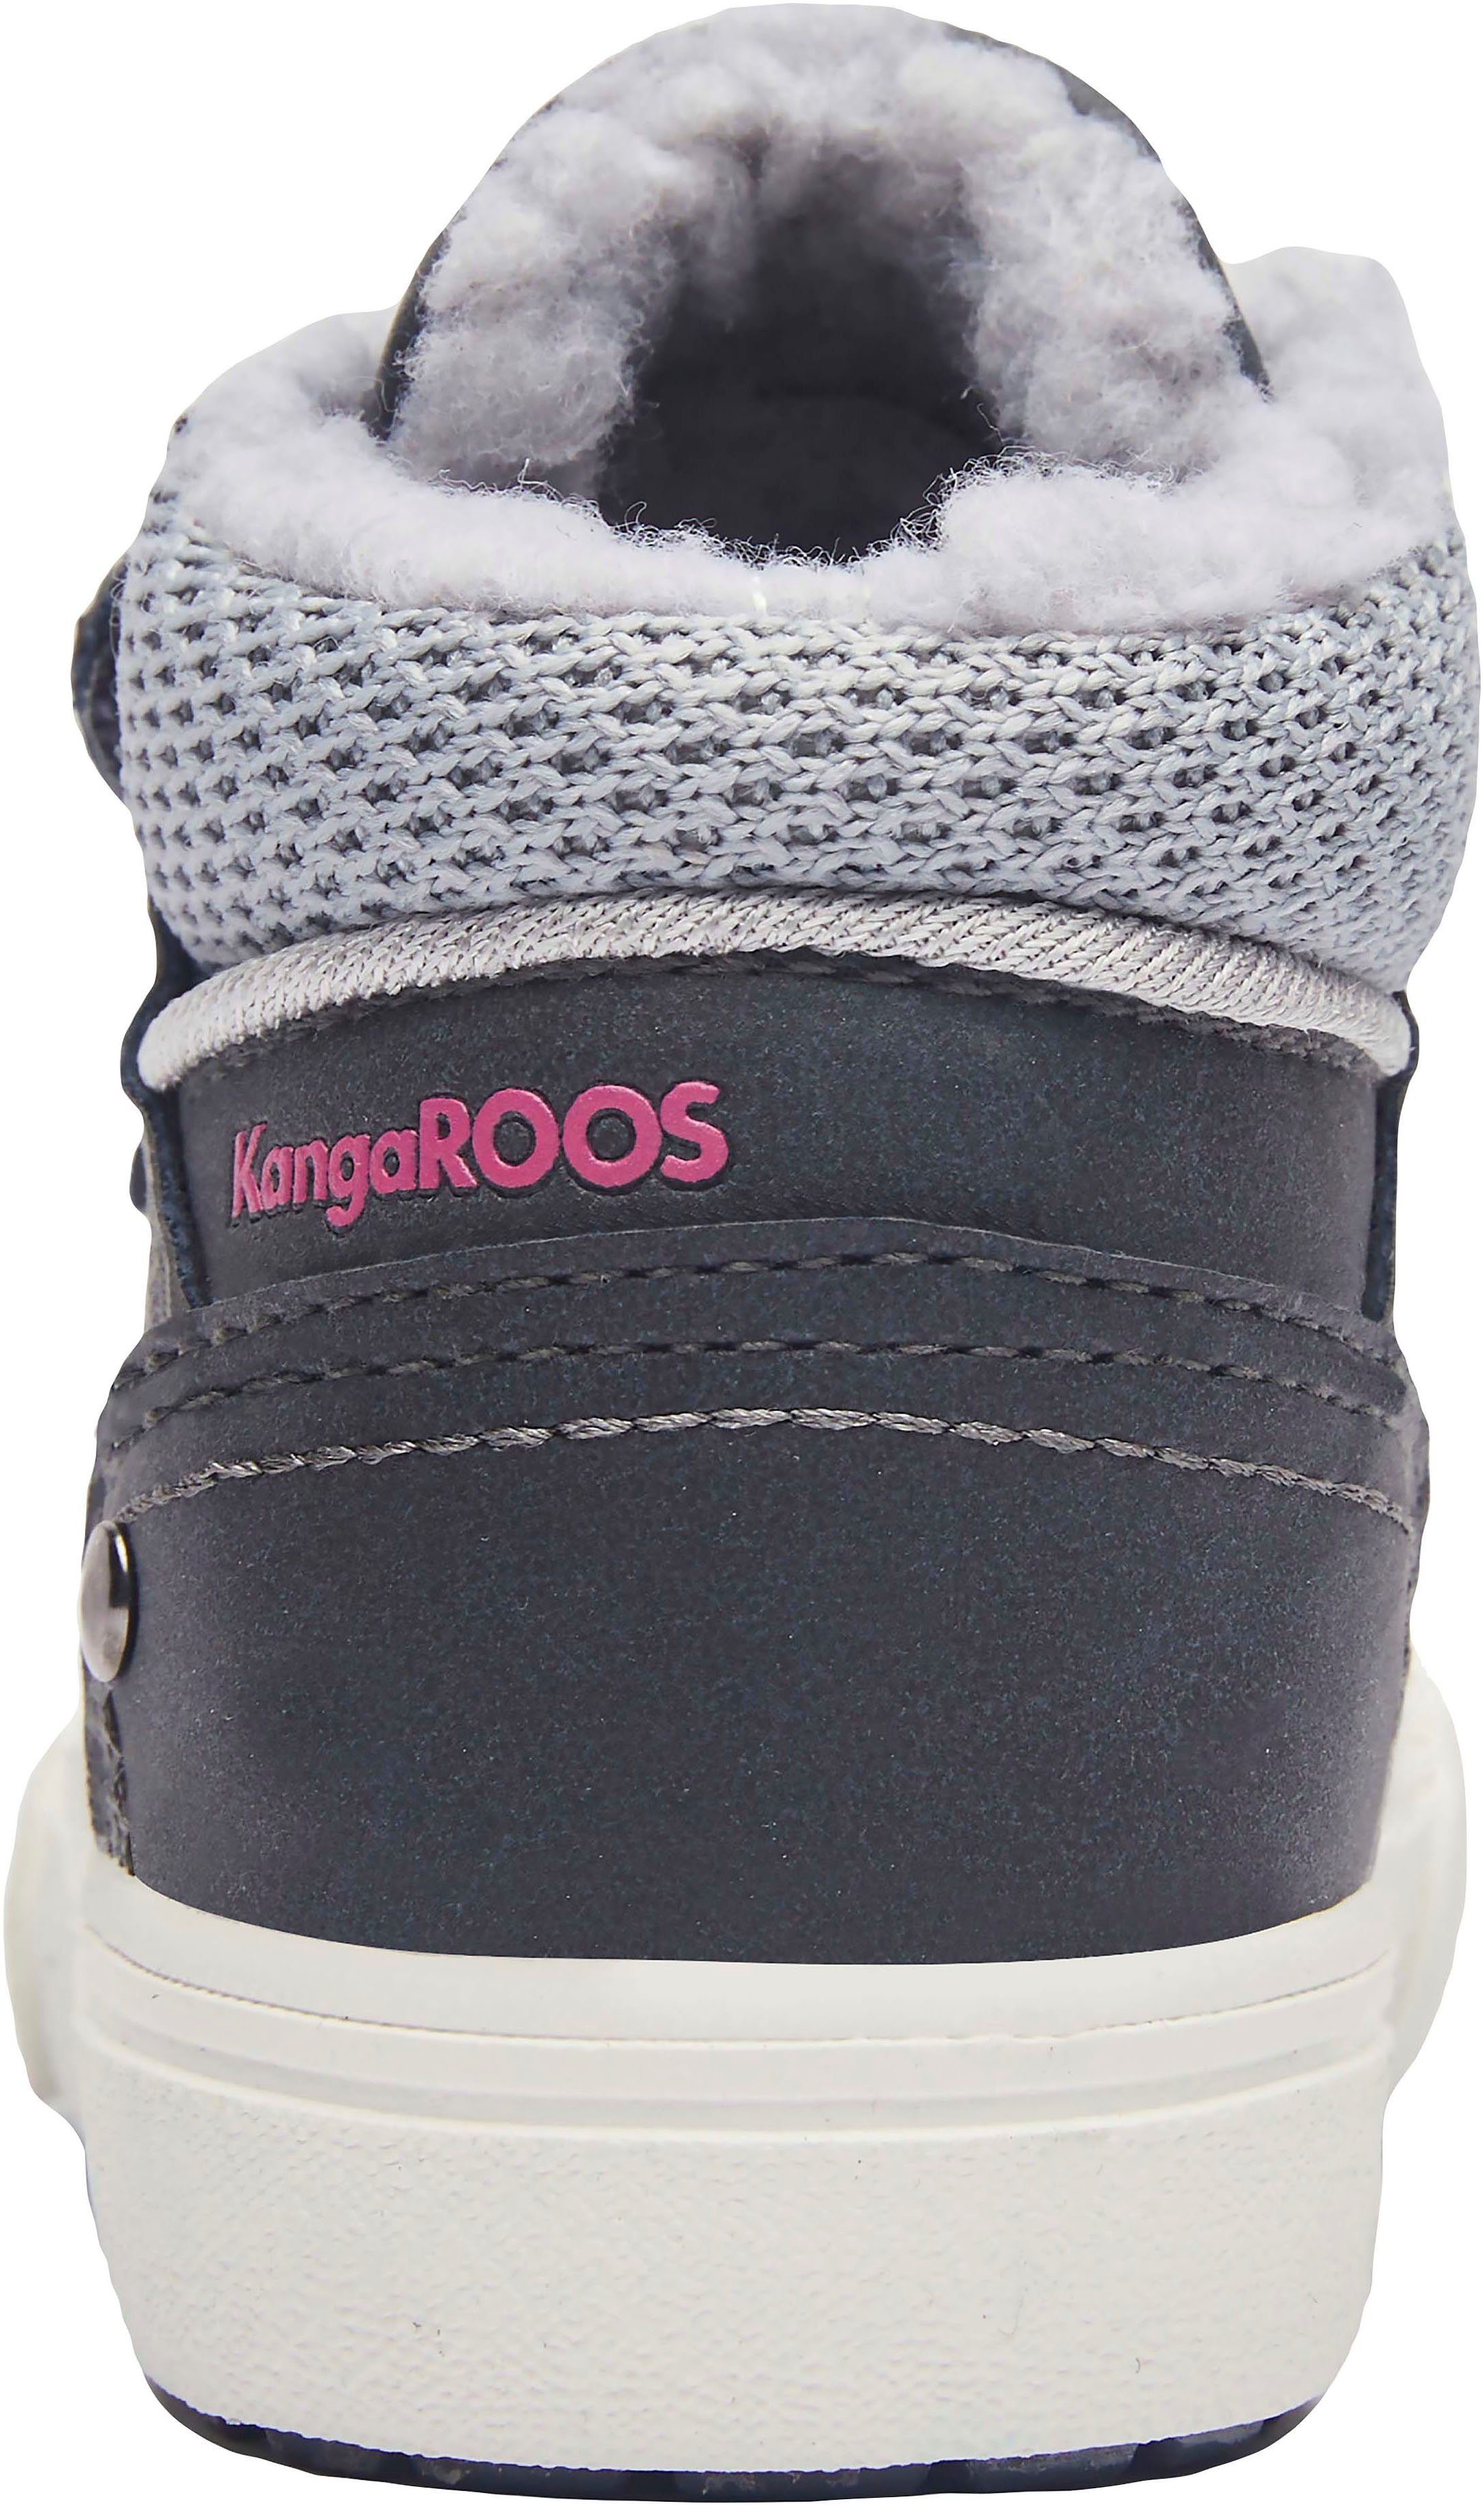 Primo KaVu V Klettverschluss mit Sneaker KangaROOS blau-pink